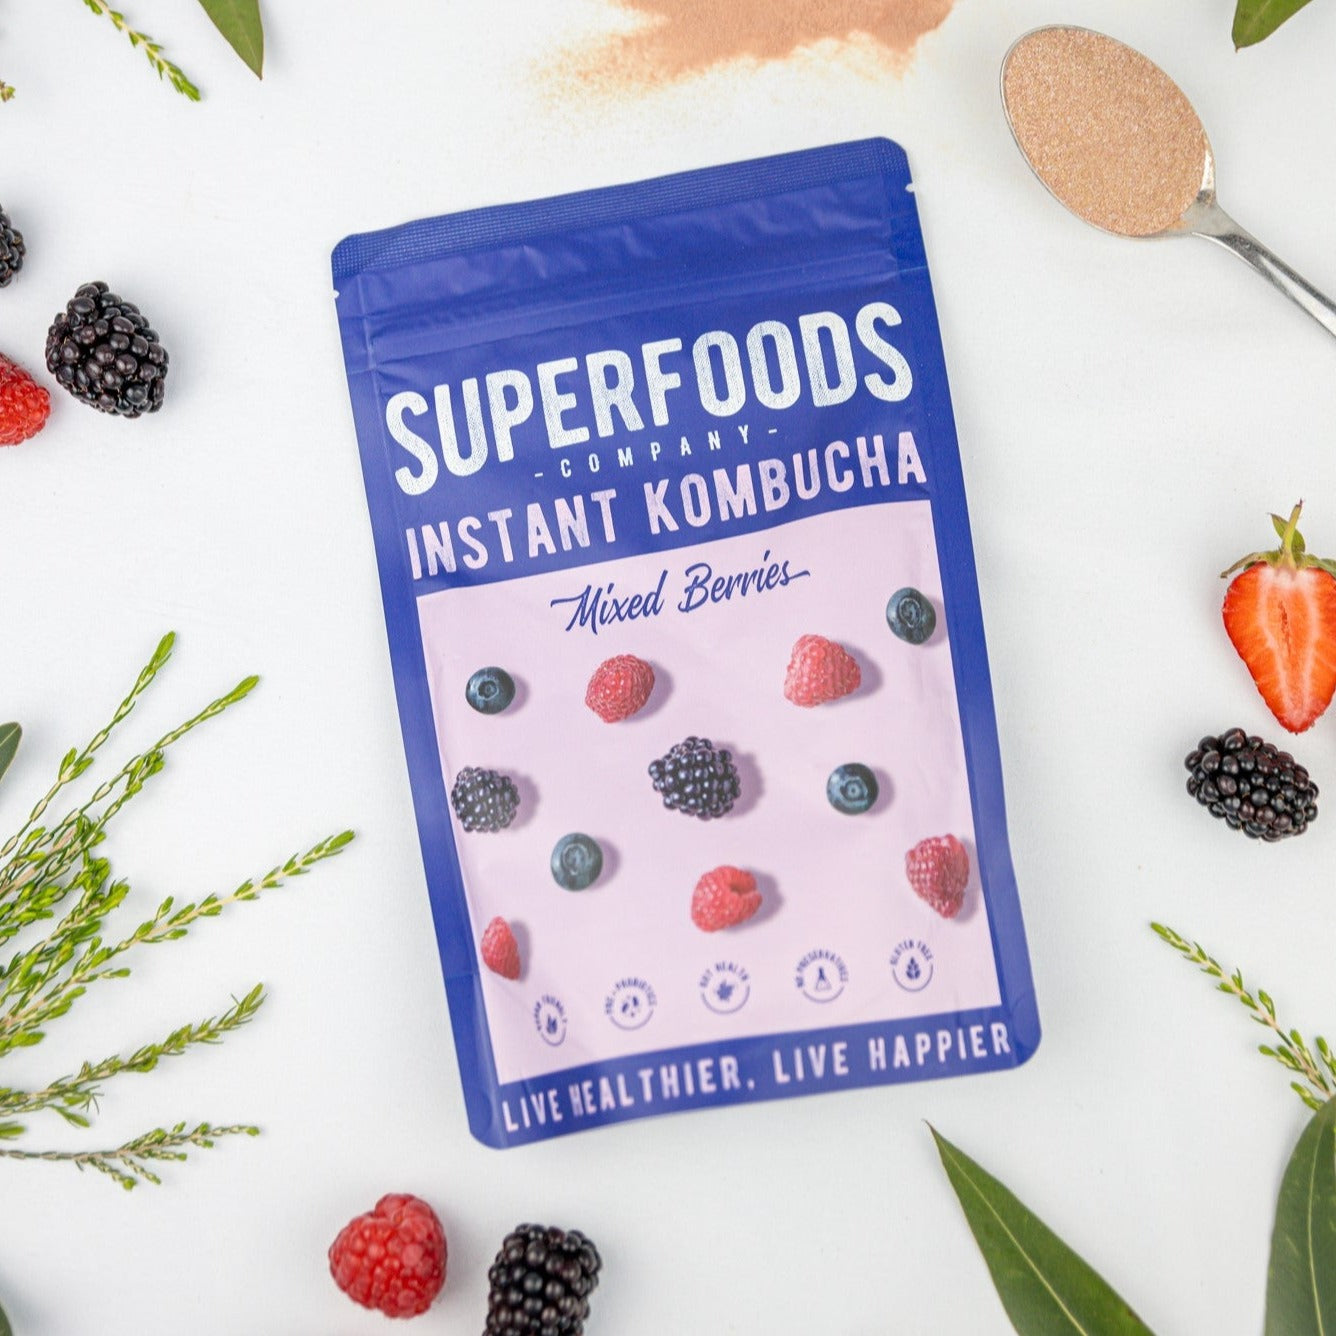 Instant Kombucha - Mixed Berries